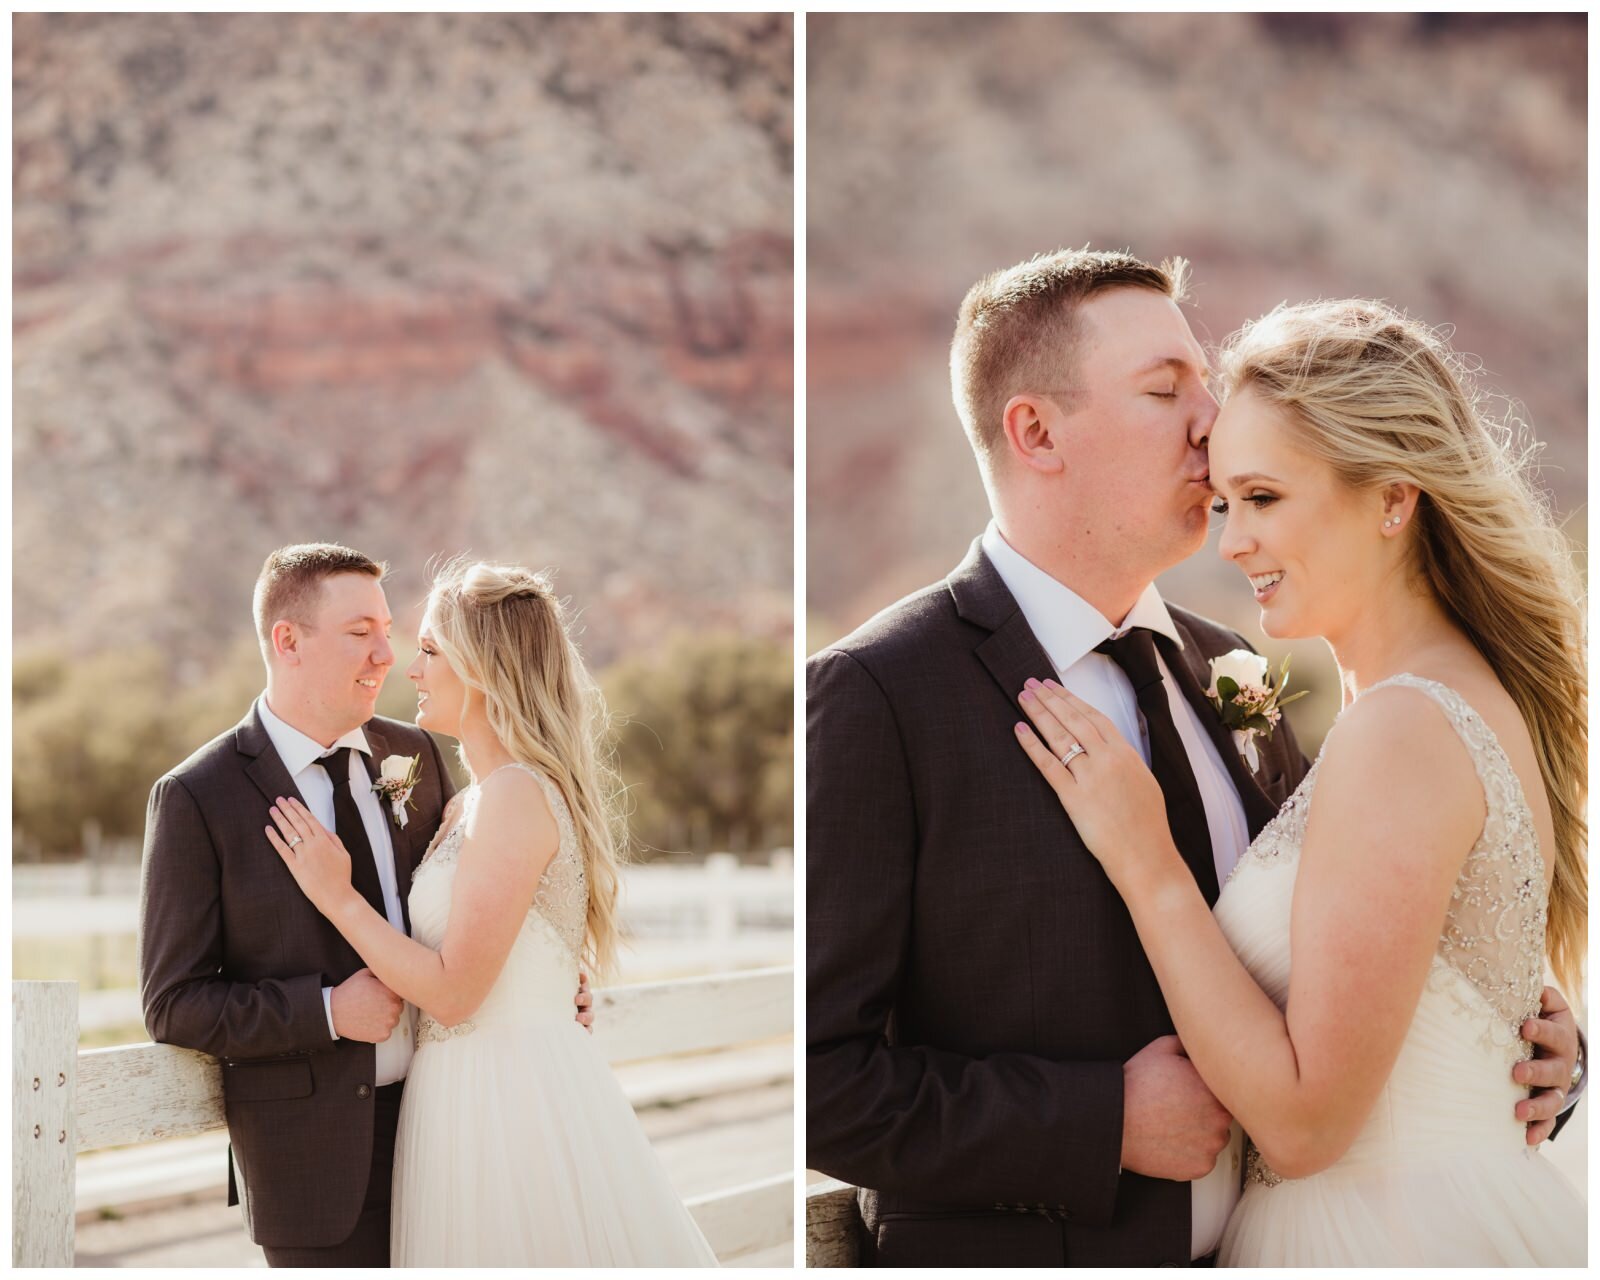 Spring Mountain Ranch Wedding Photos - Amber Garrett Photography - 003.jpg